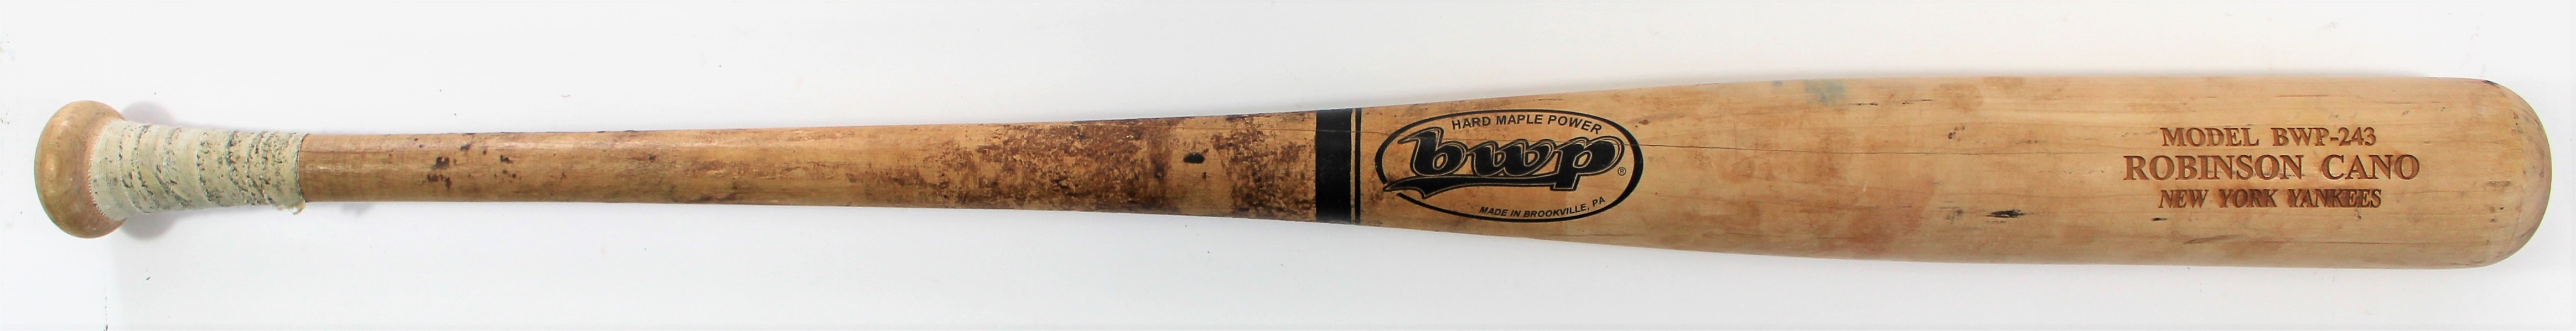 Robinson Cano NY Yankees Game Used Bat